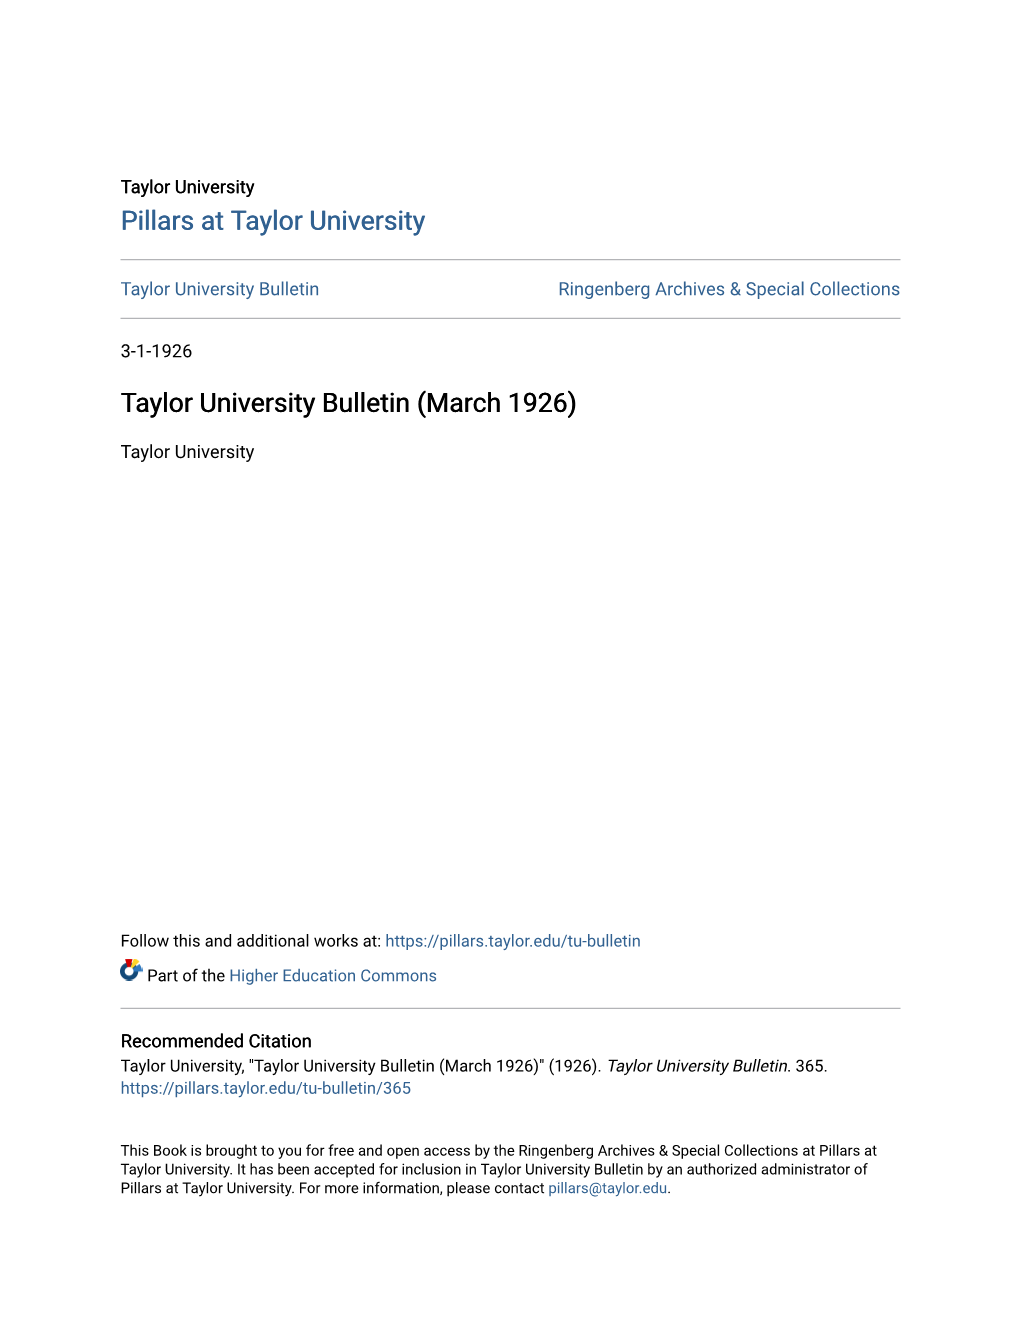 Taylor University Bulletin (March 1926)